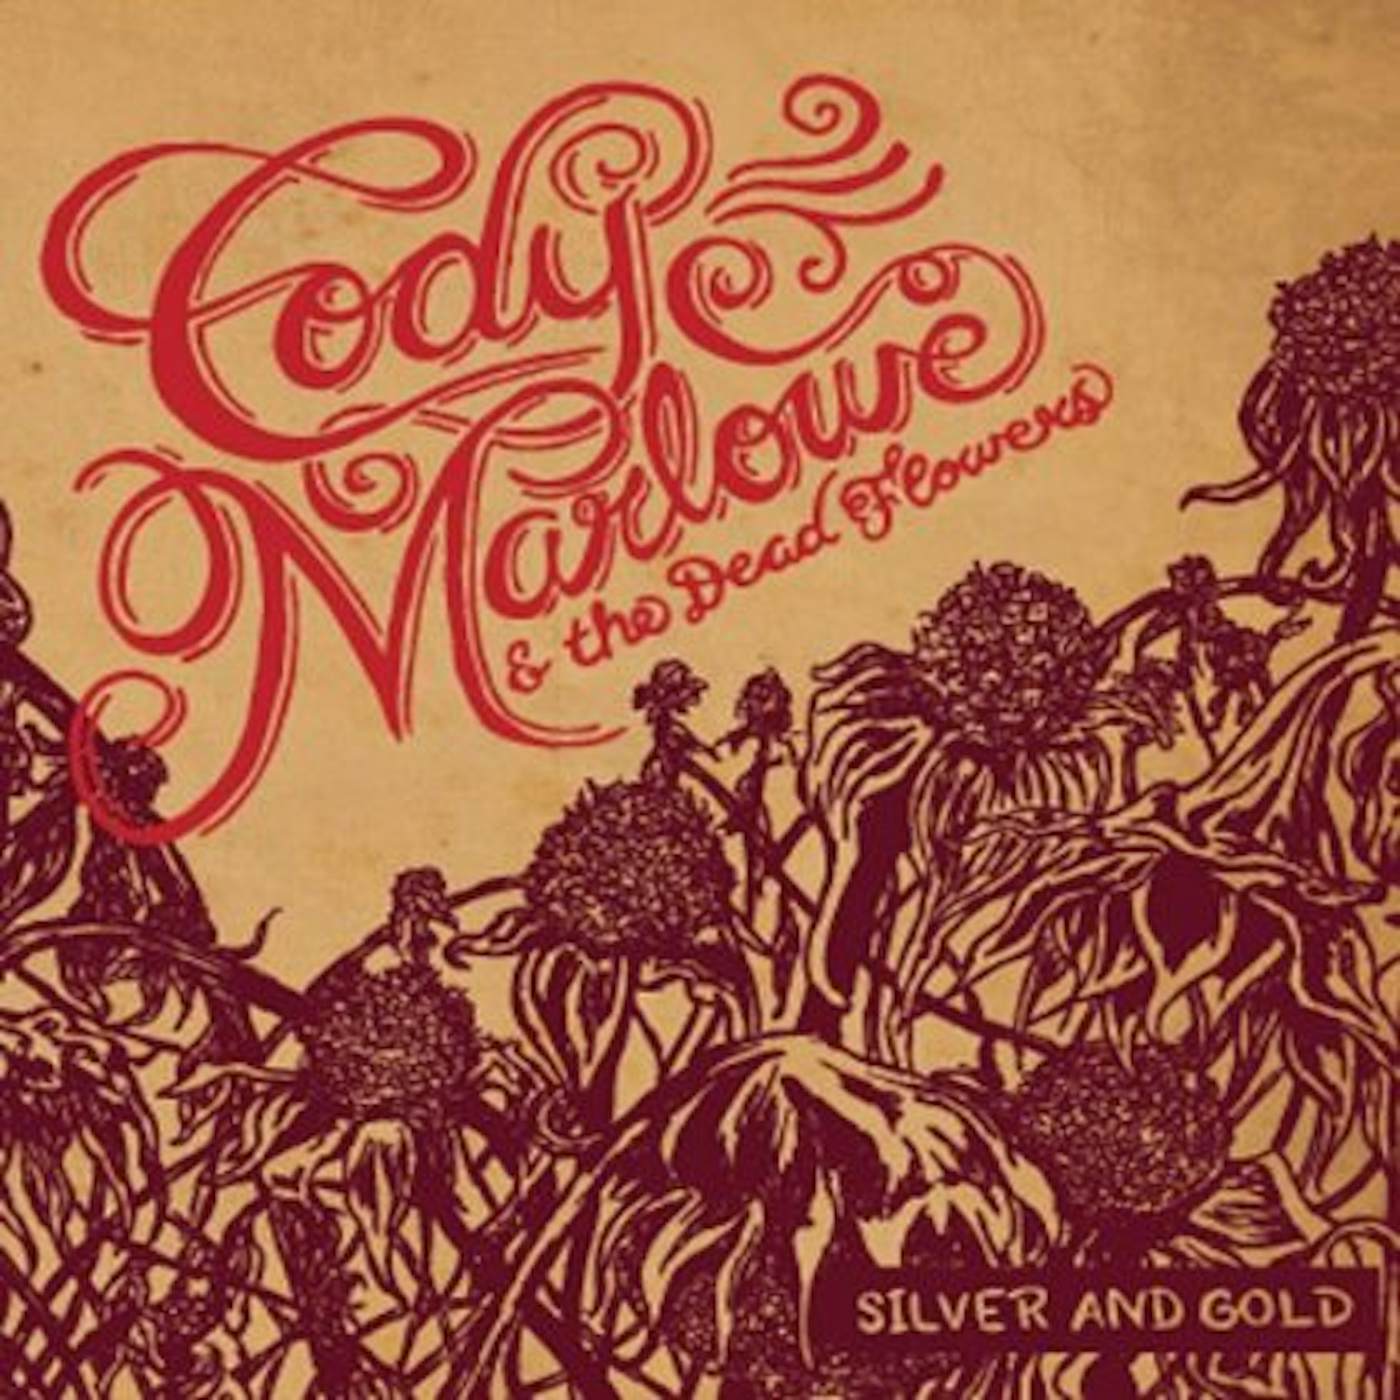 Cody Marlowe & The Dead Flowers SILVER & GOLD CD